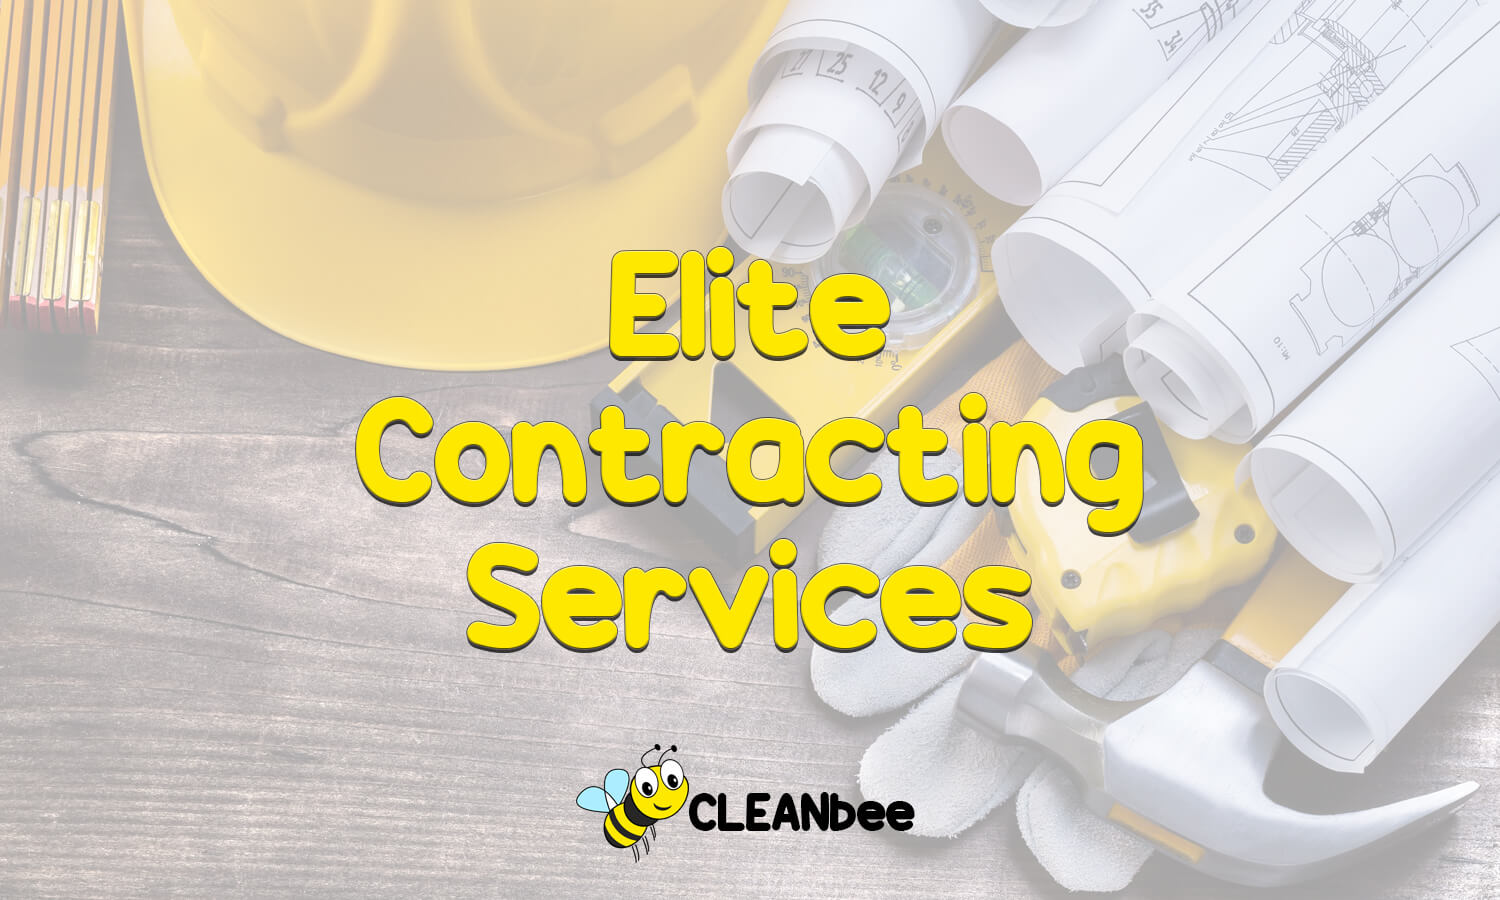 Elite Contracting Services